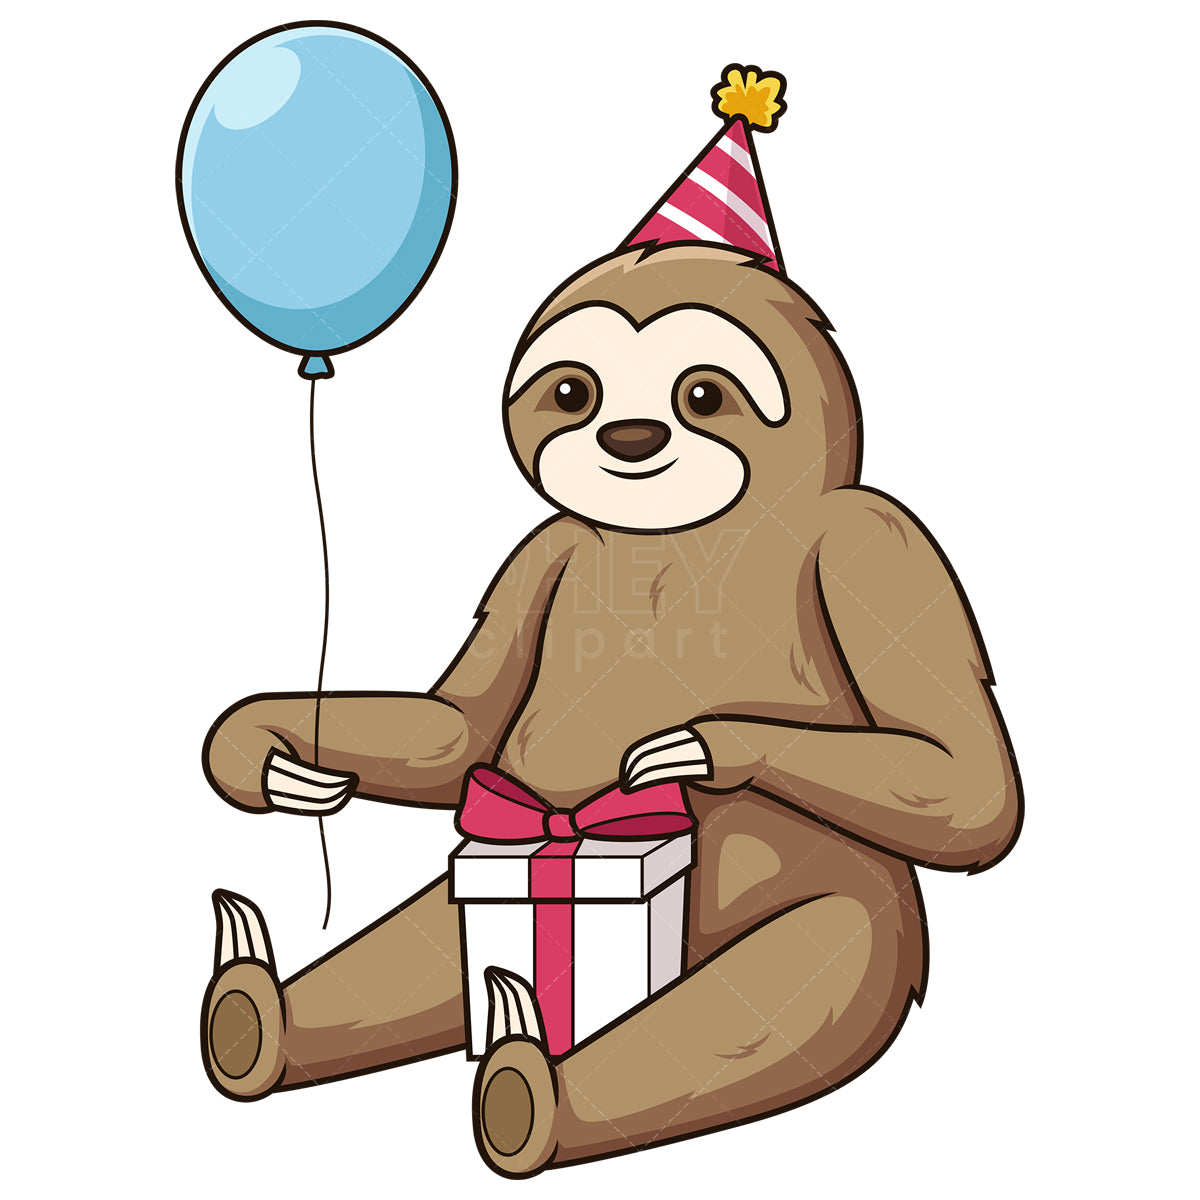 Royalty-free stock vector illustration of a birthday sloth holding balloon.